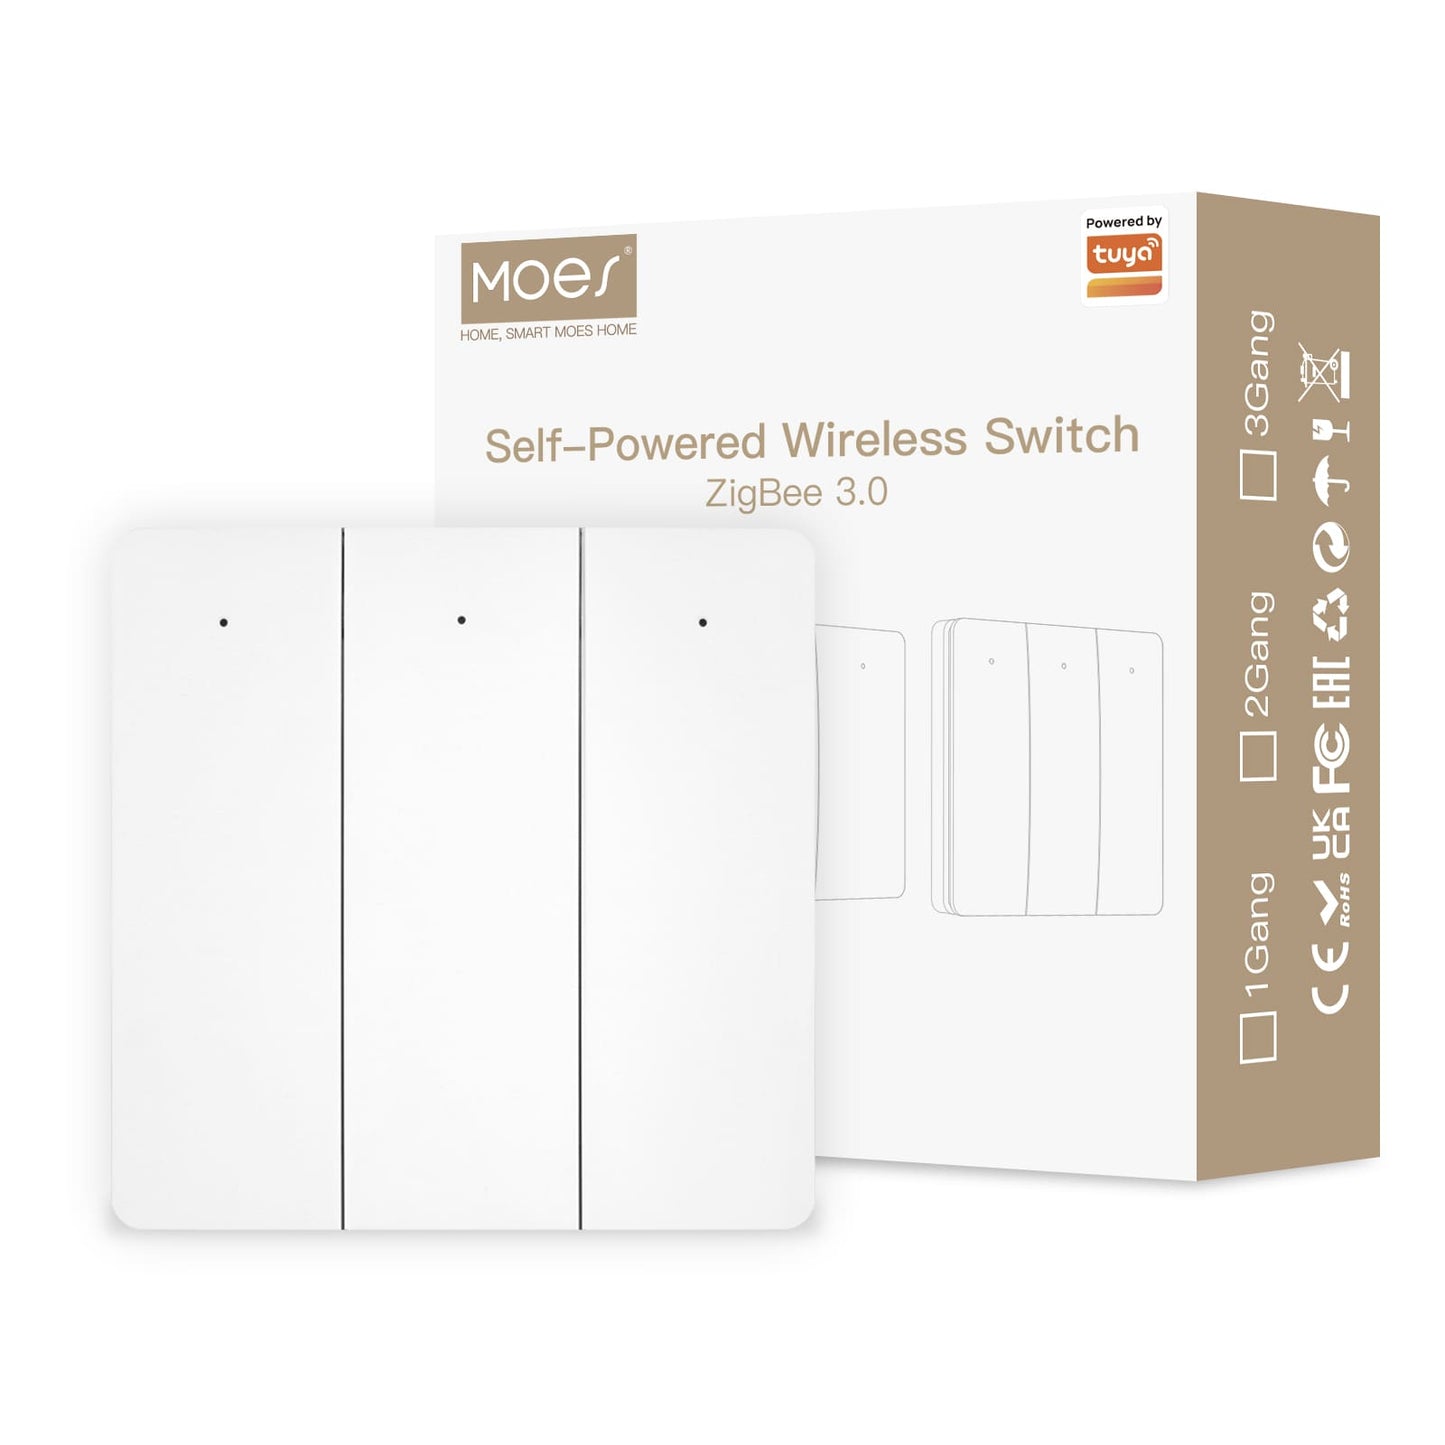 Self-Powered Wireless Switch ZigBee 3.0 - MOES